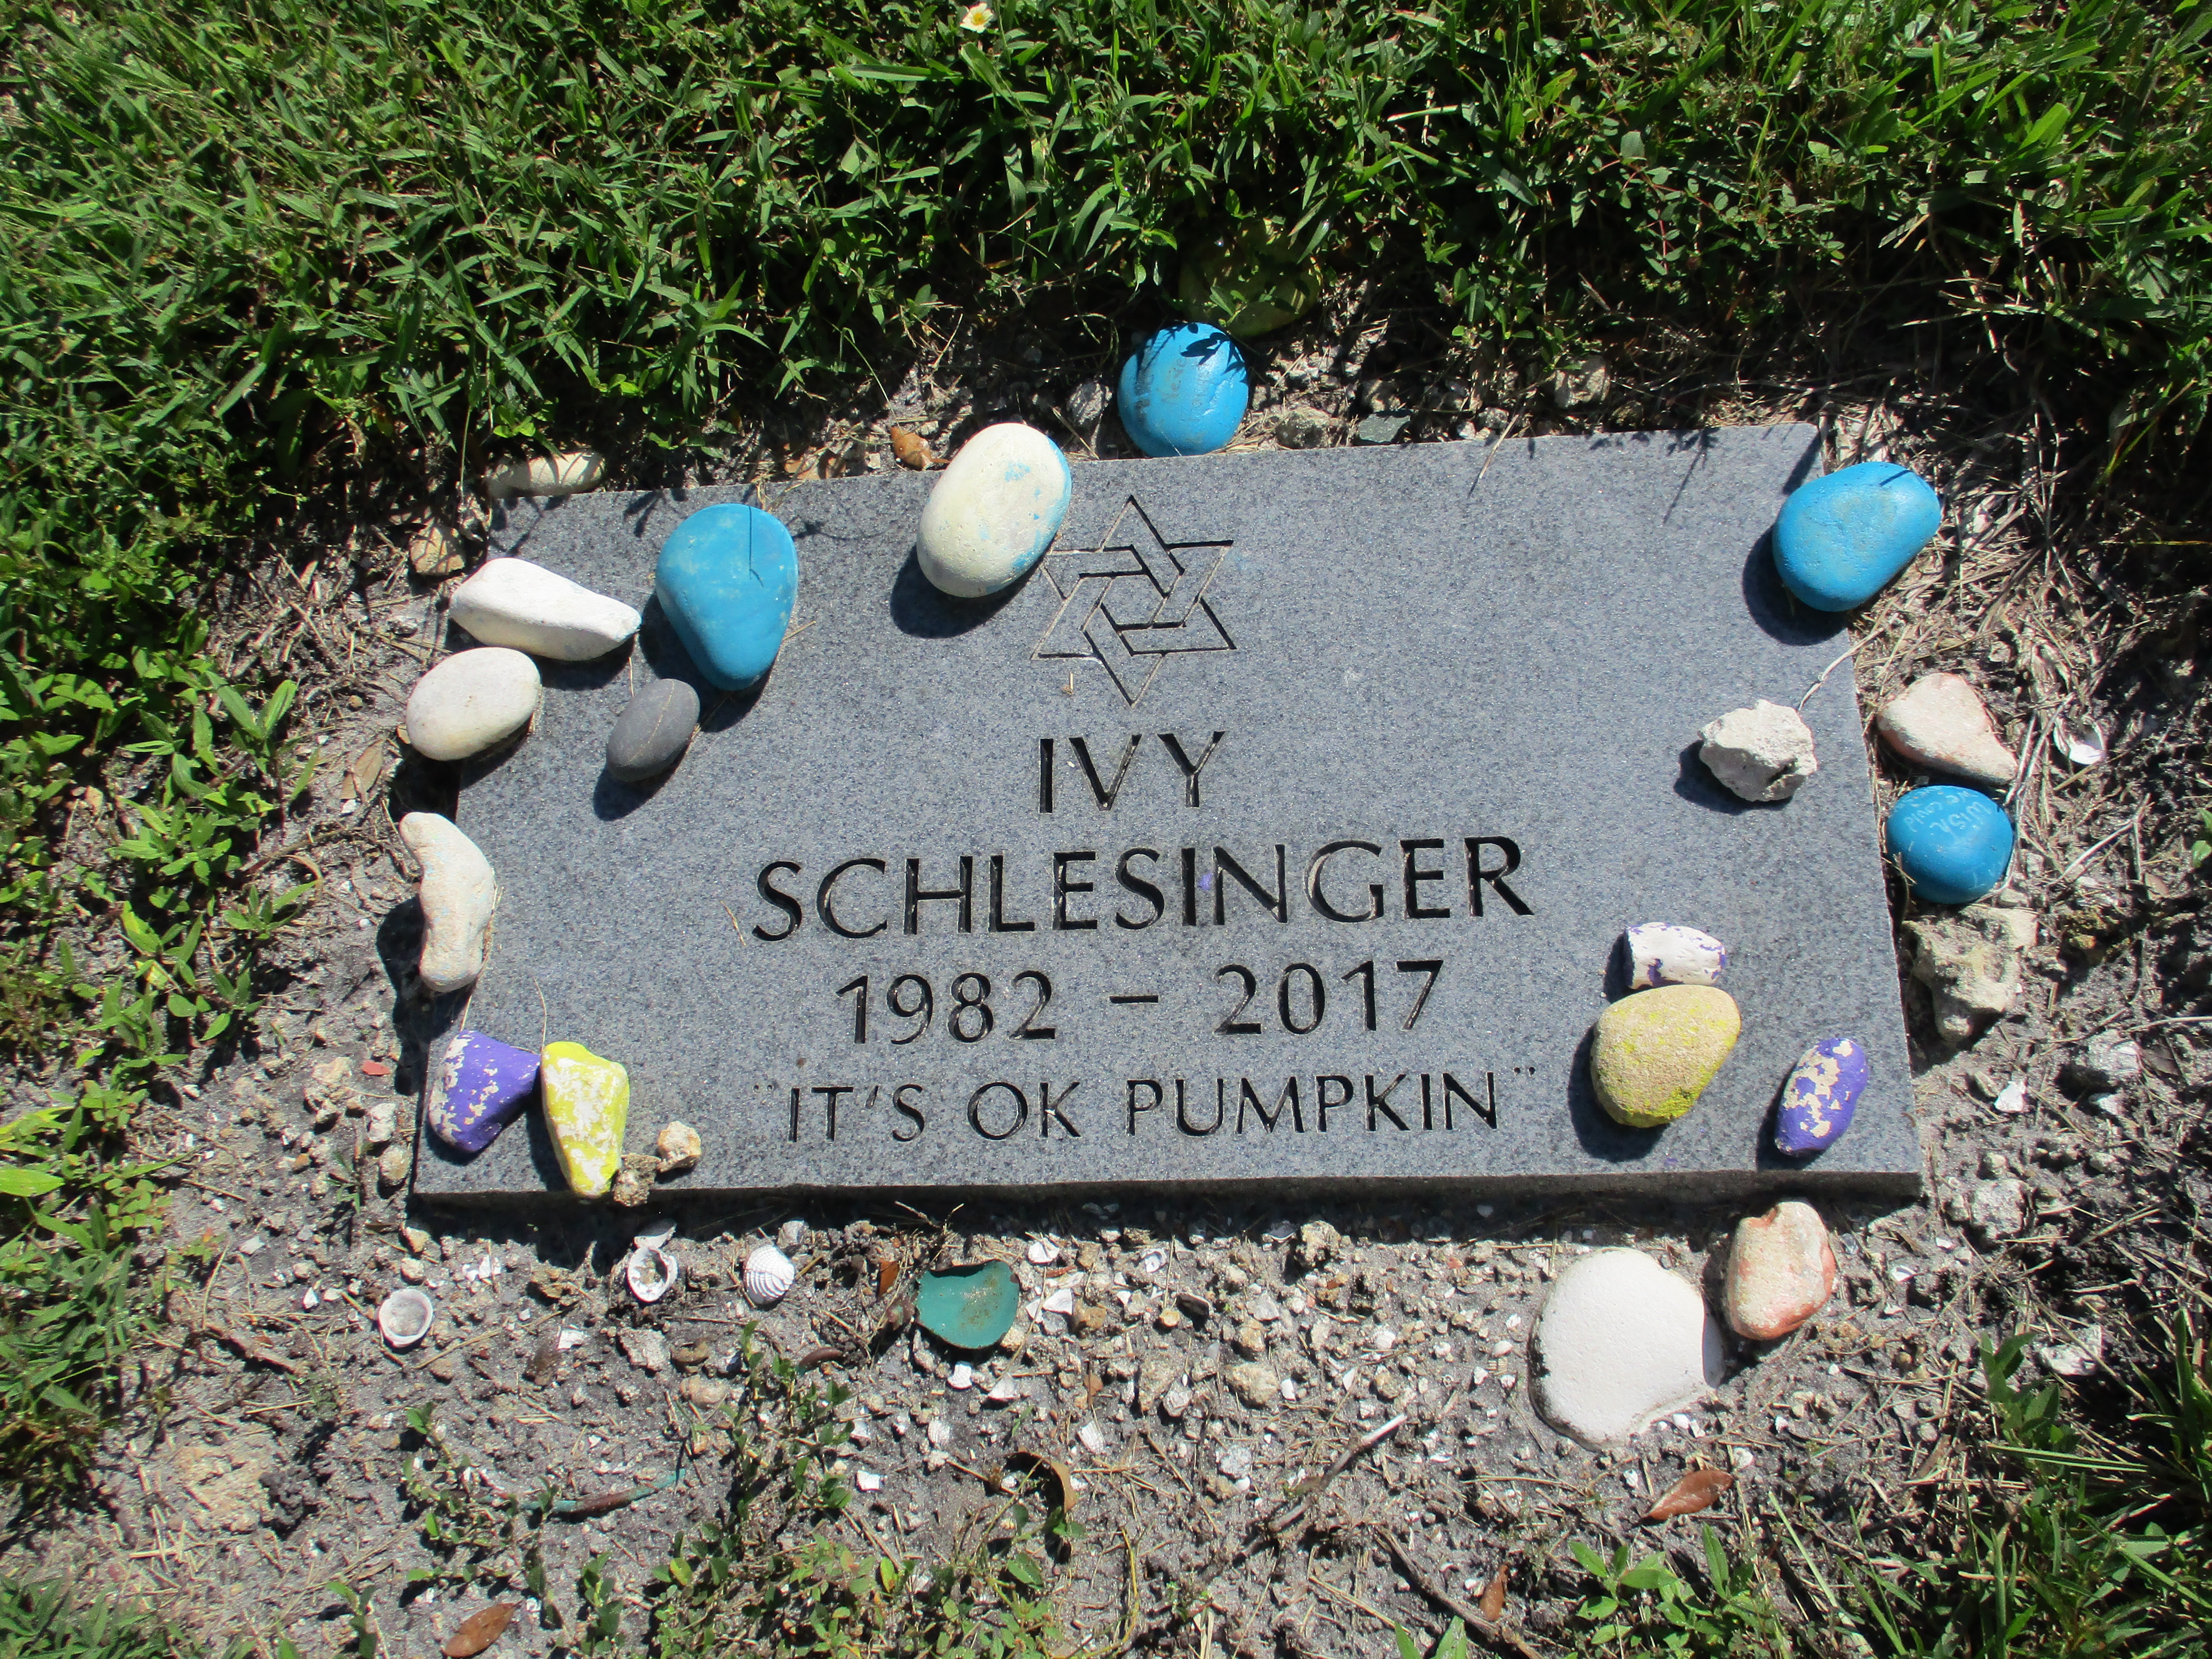 Ivy Schlesinger